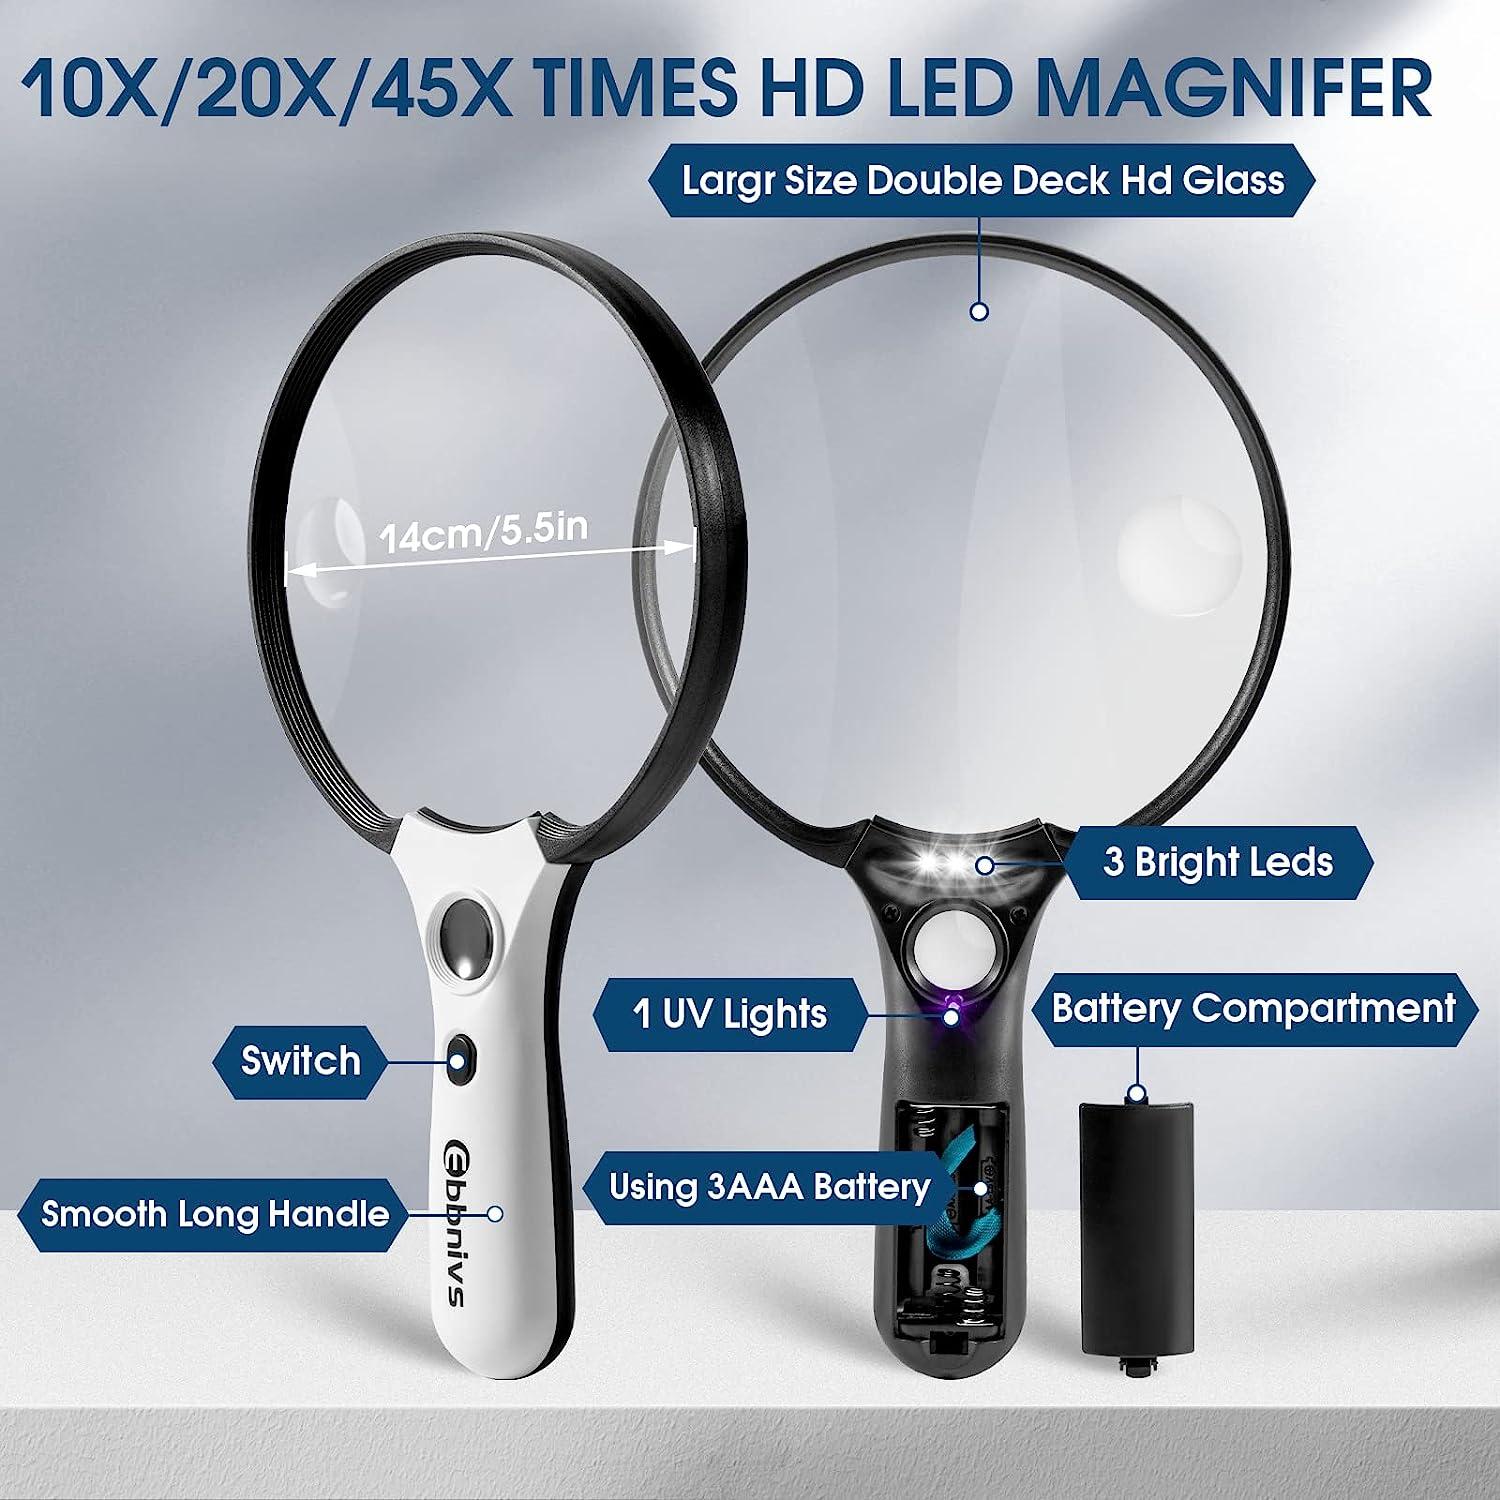 Huge LED Magnifier Our Largest Magnifier with 14 LED's Huge 4